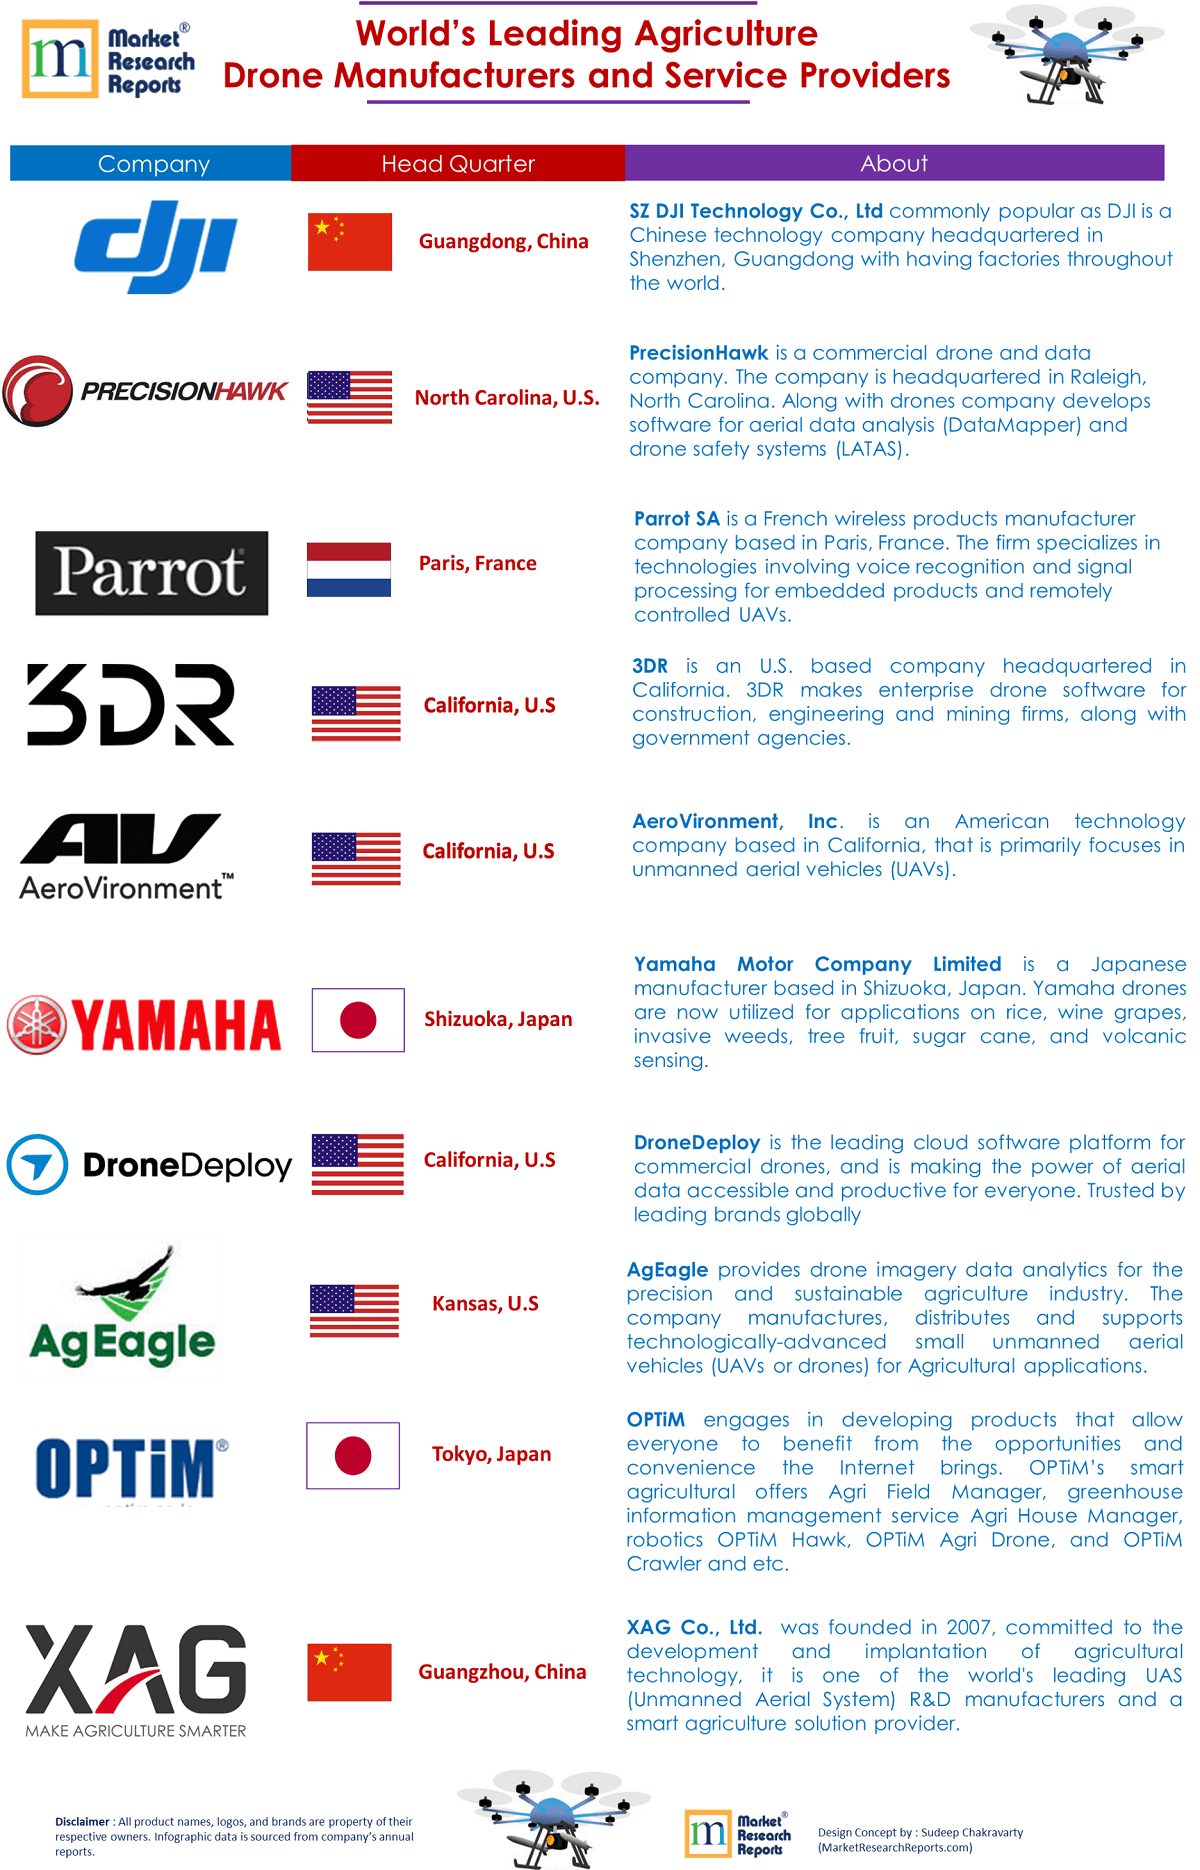 top drone companies